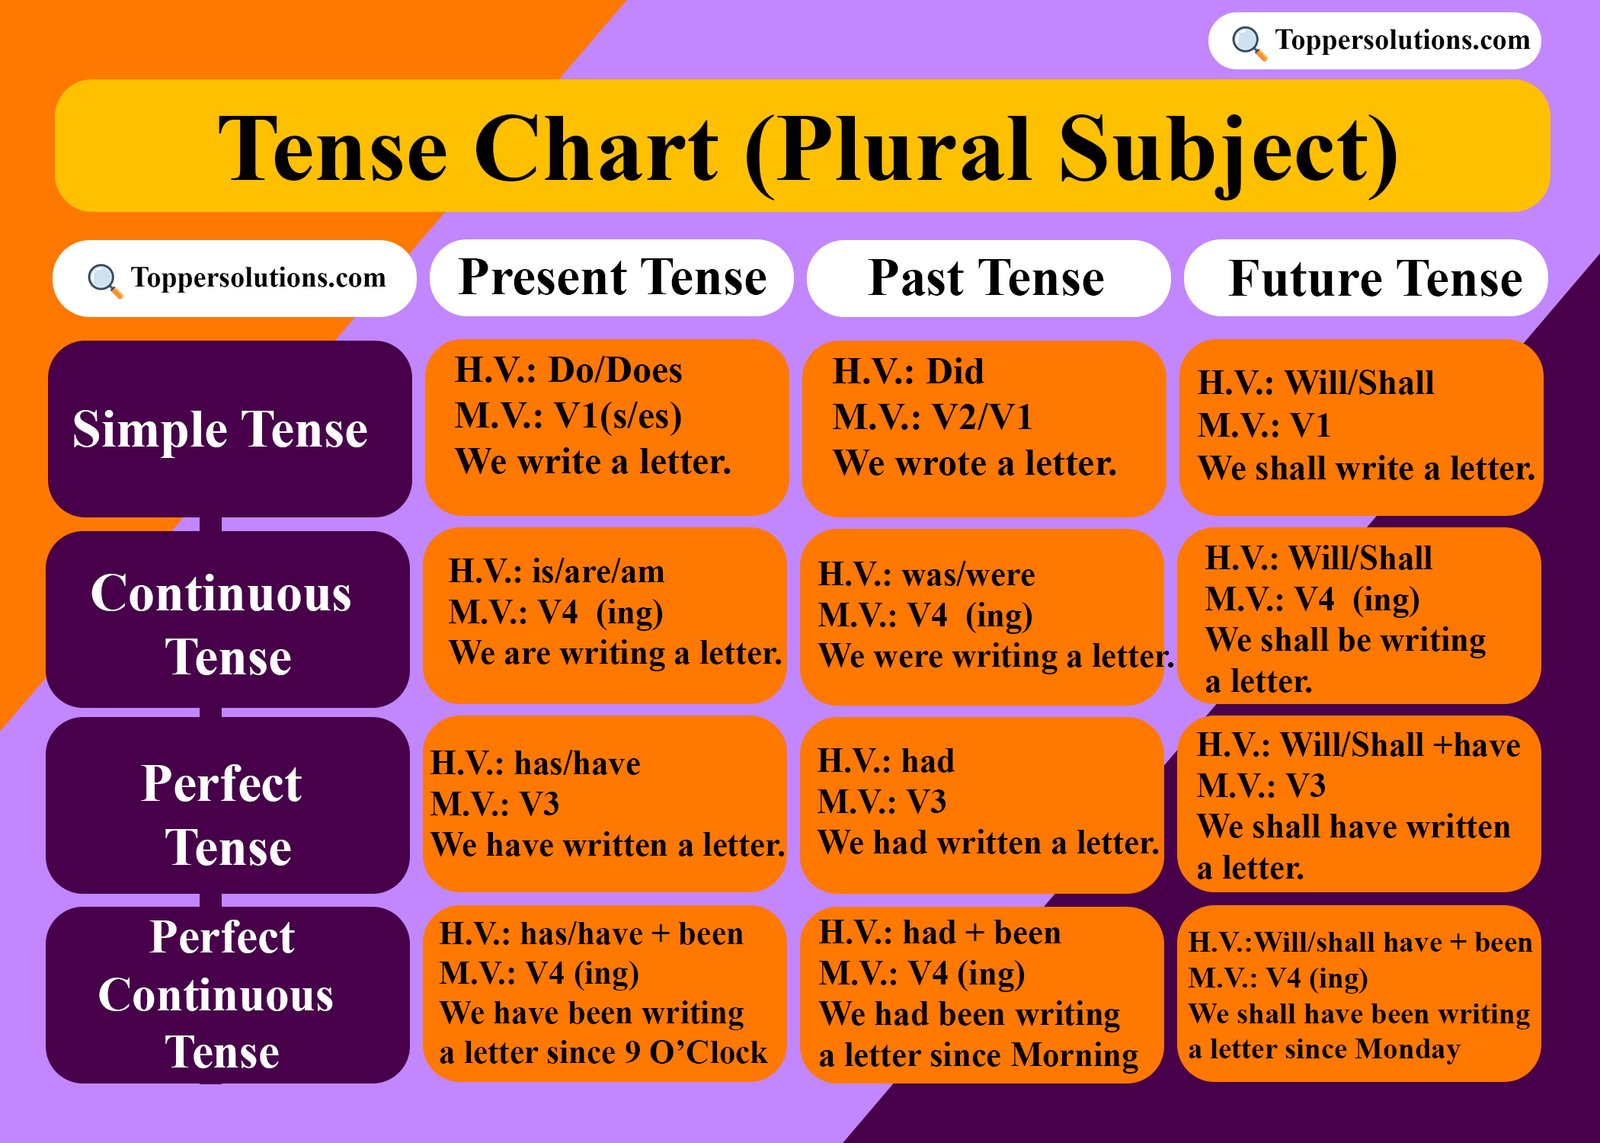 Tense chart (Plural subject)